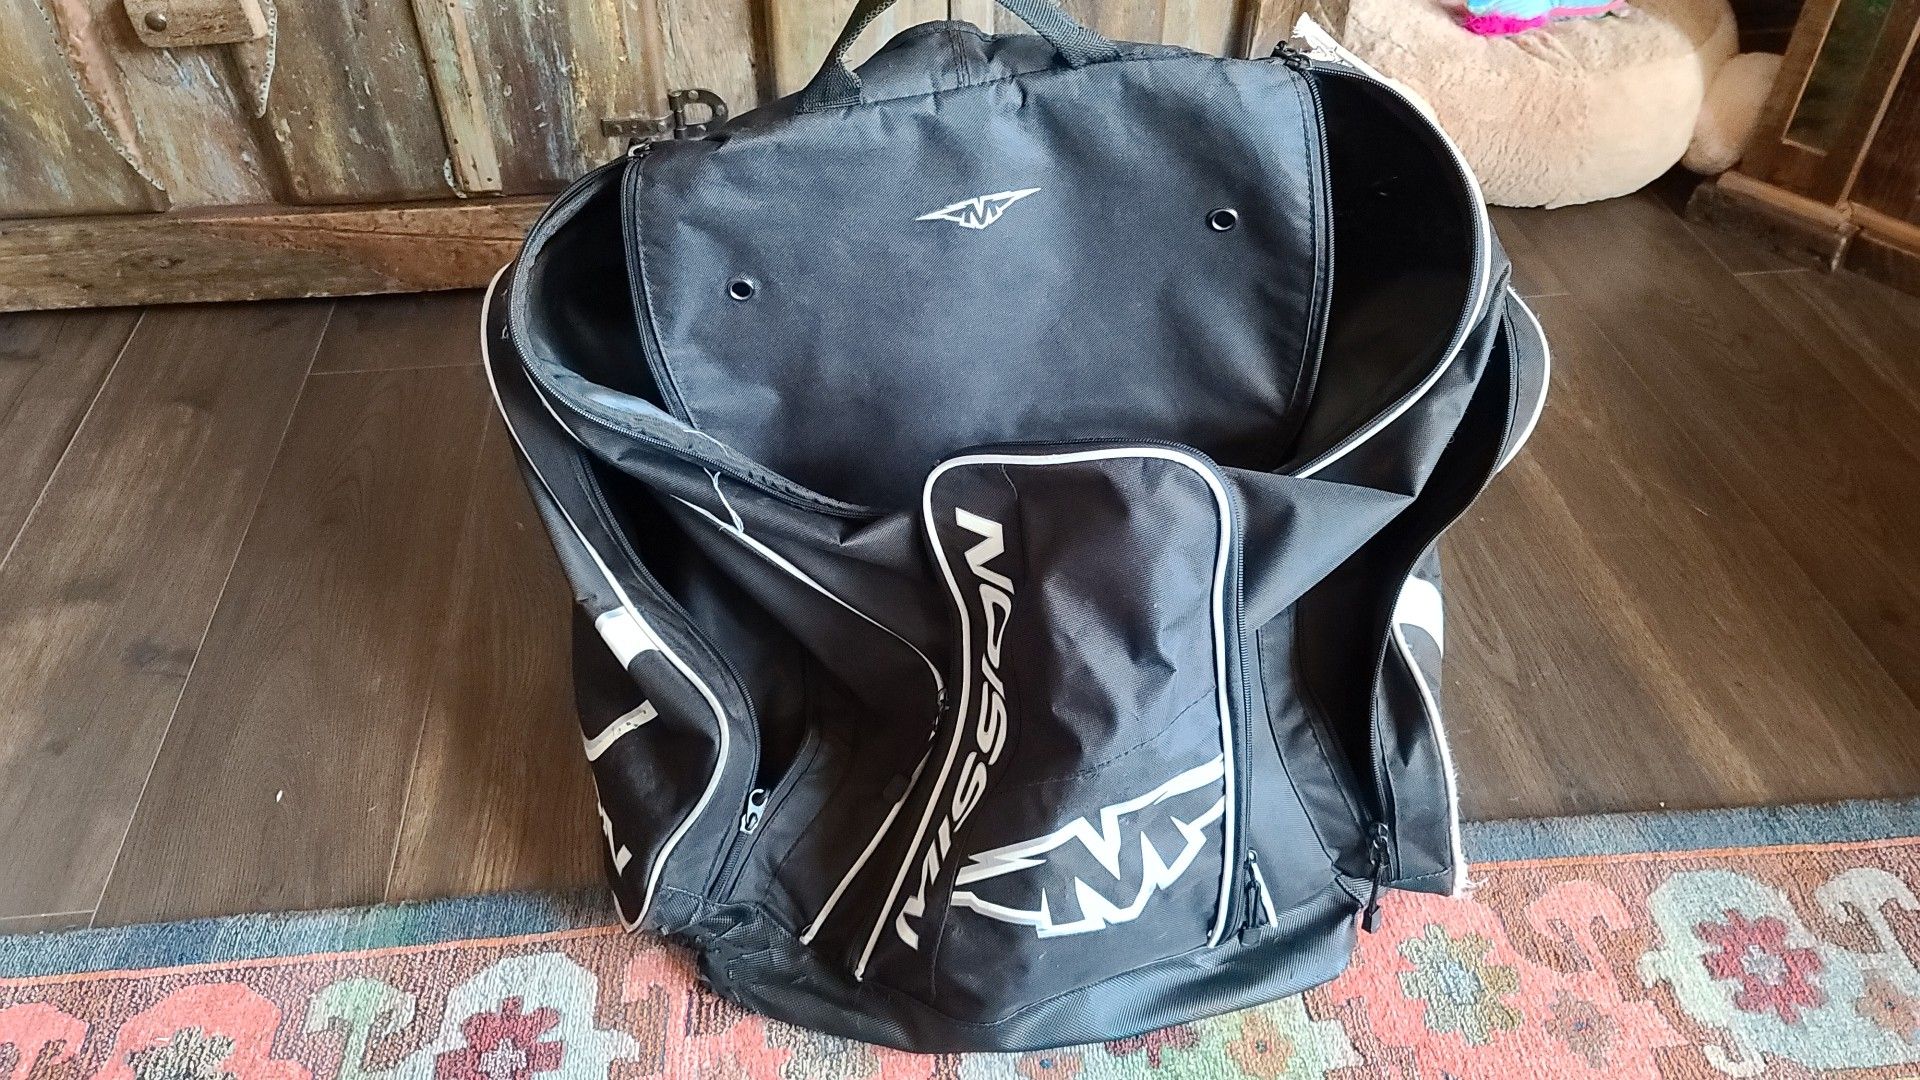 Mission Hockey Backpack Gear Bag